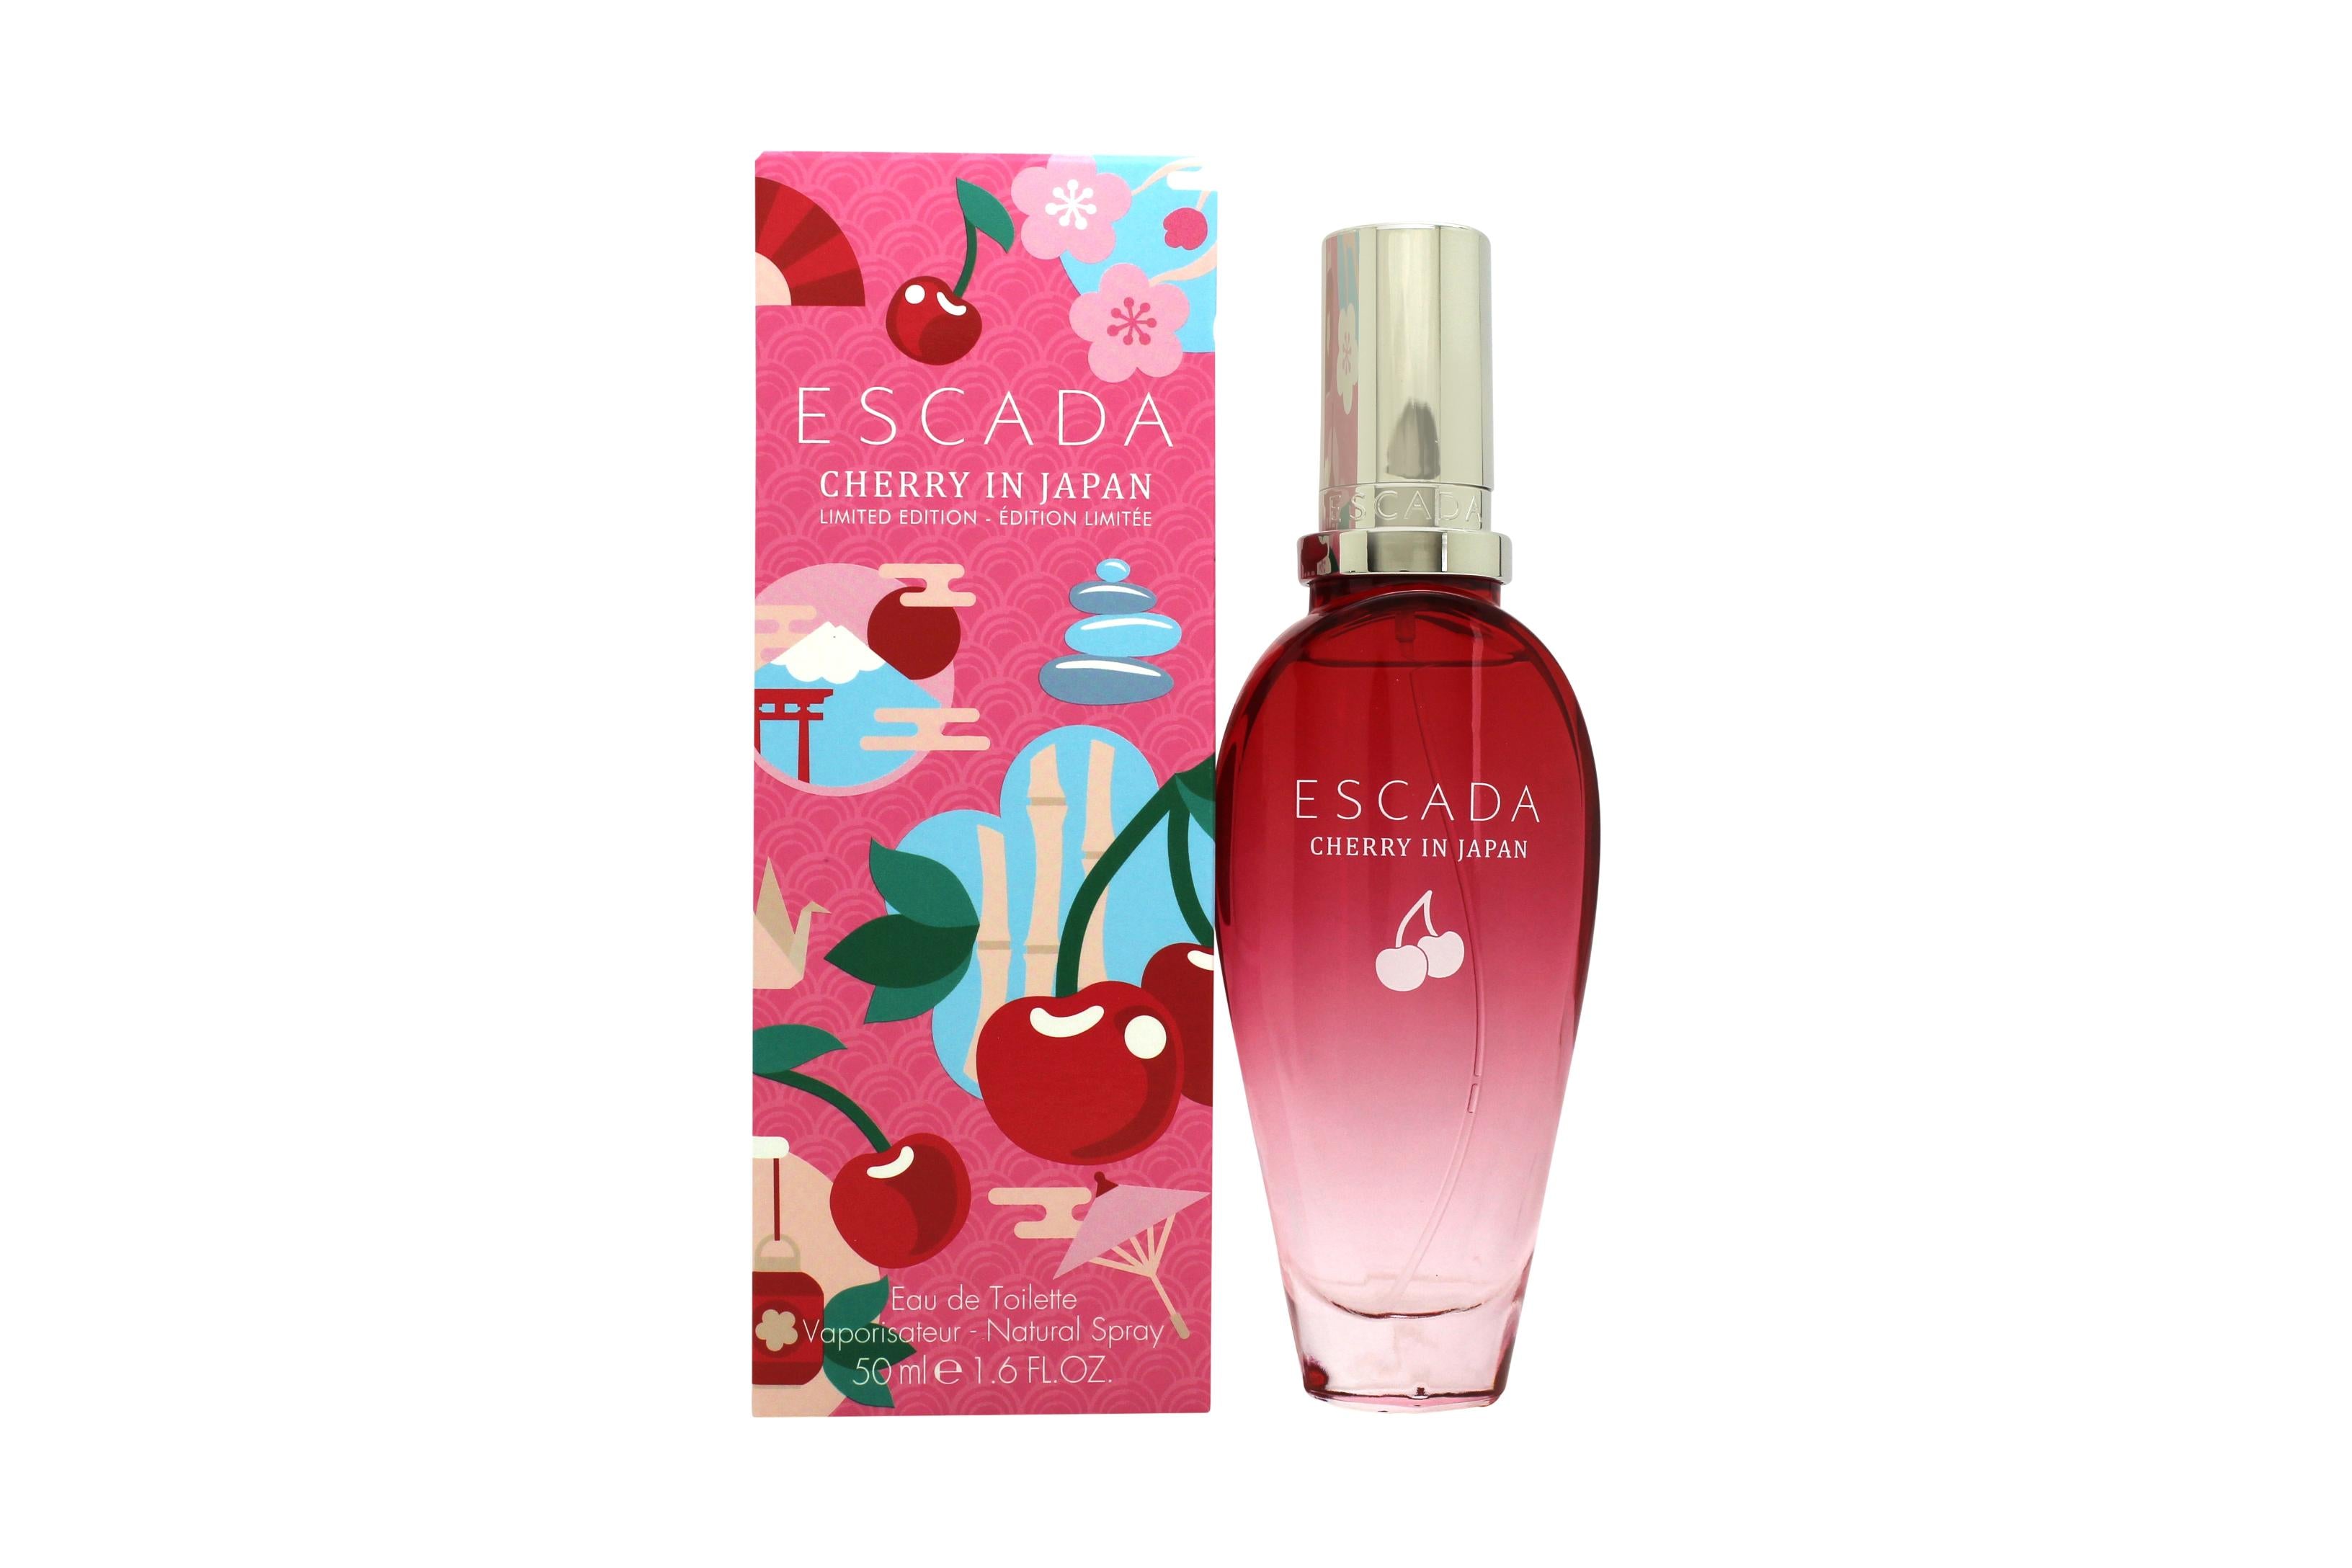 View Escada Cherry In Japan Eau de Toilette 50ml Spray Limited Edition information